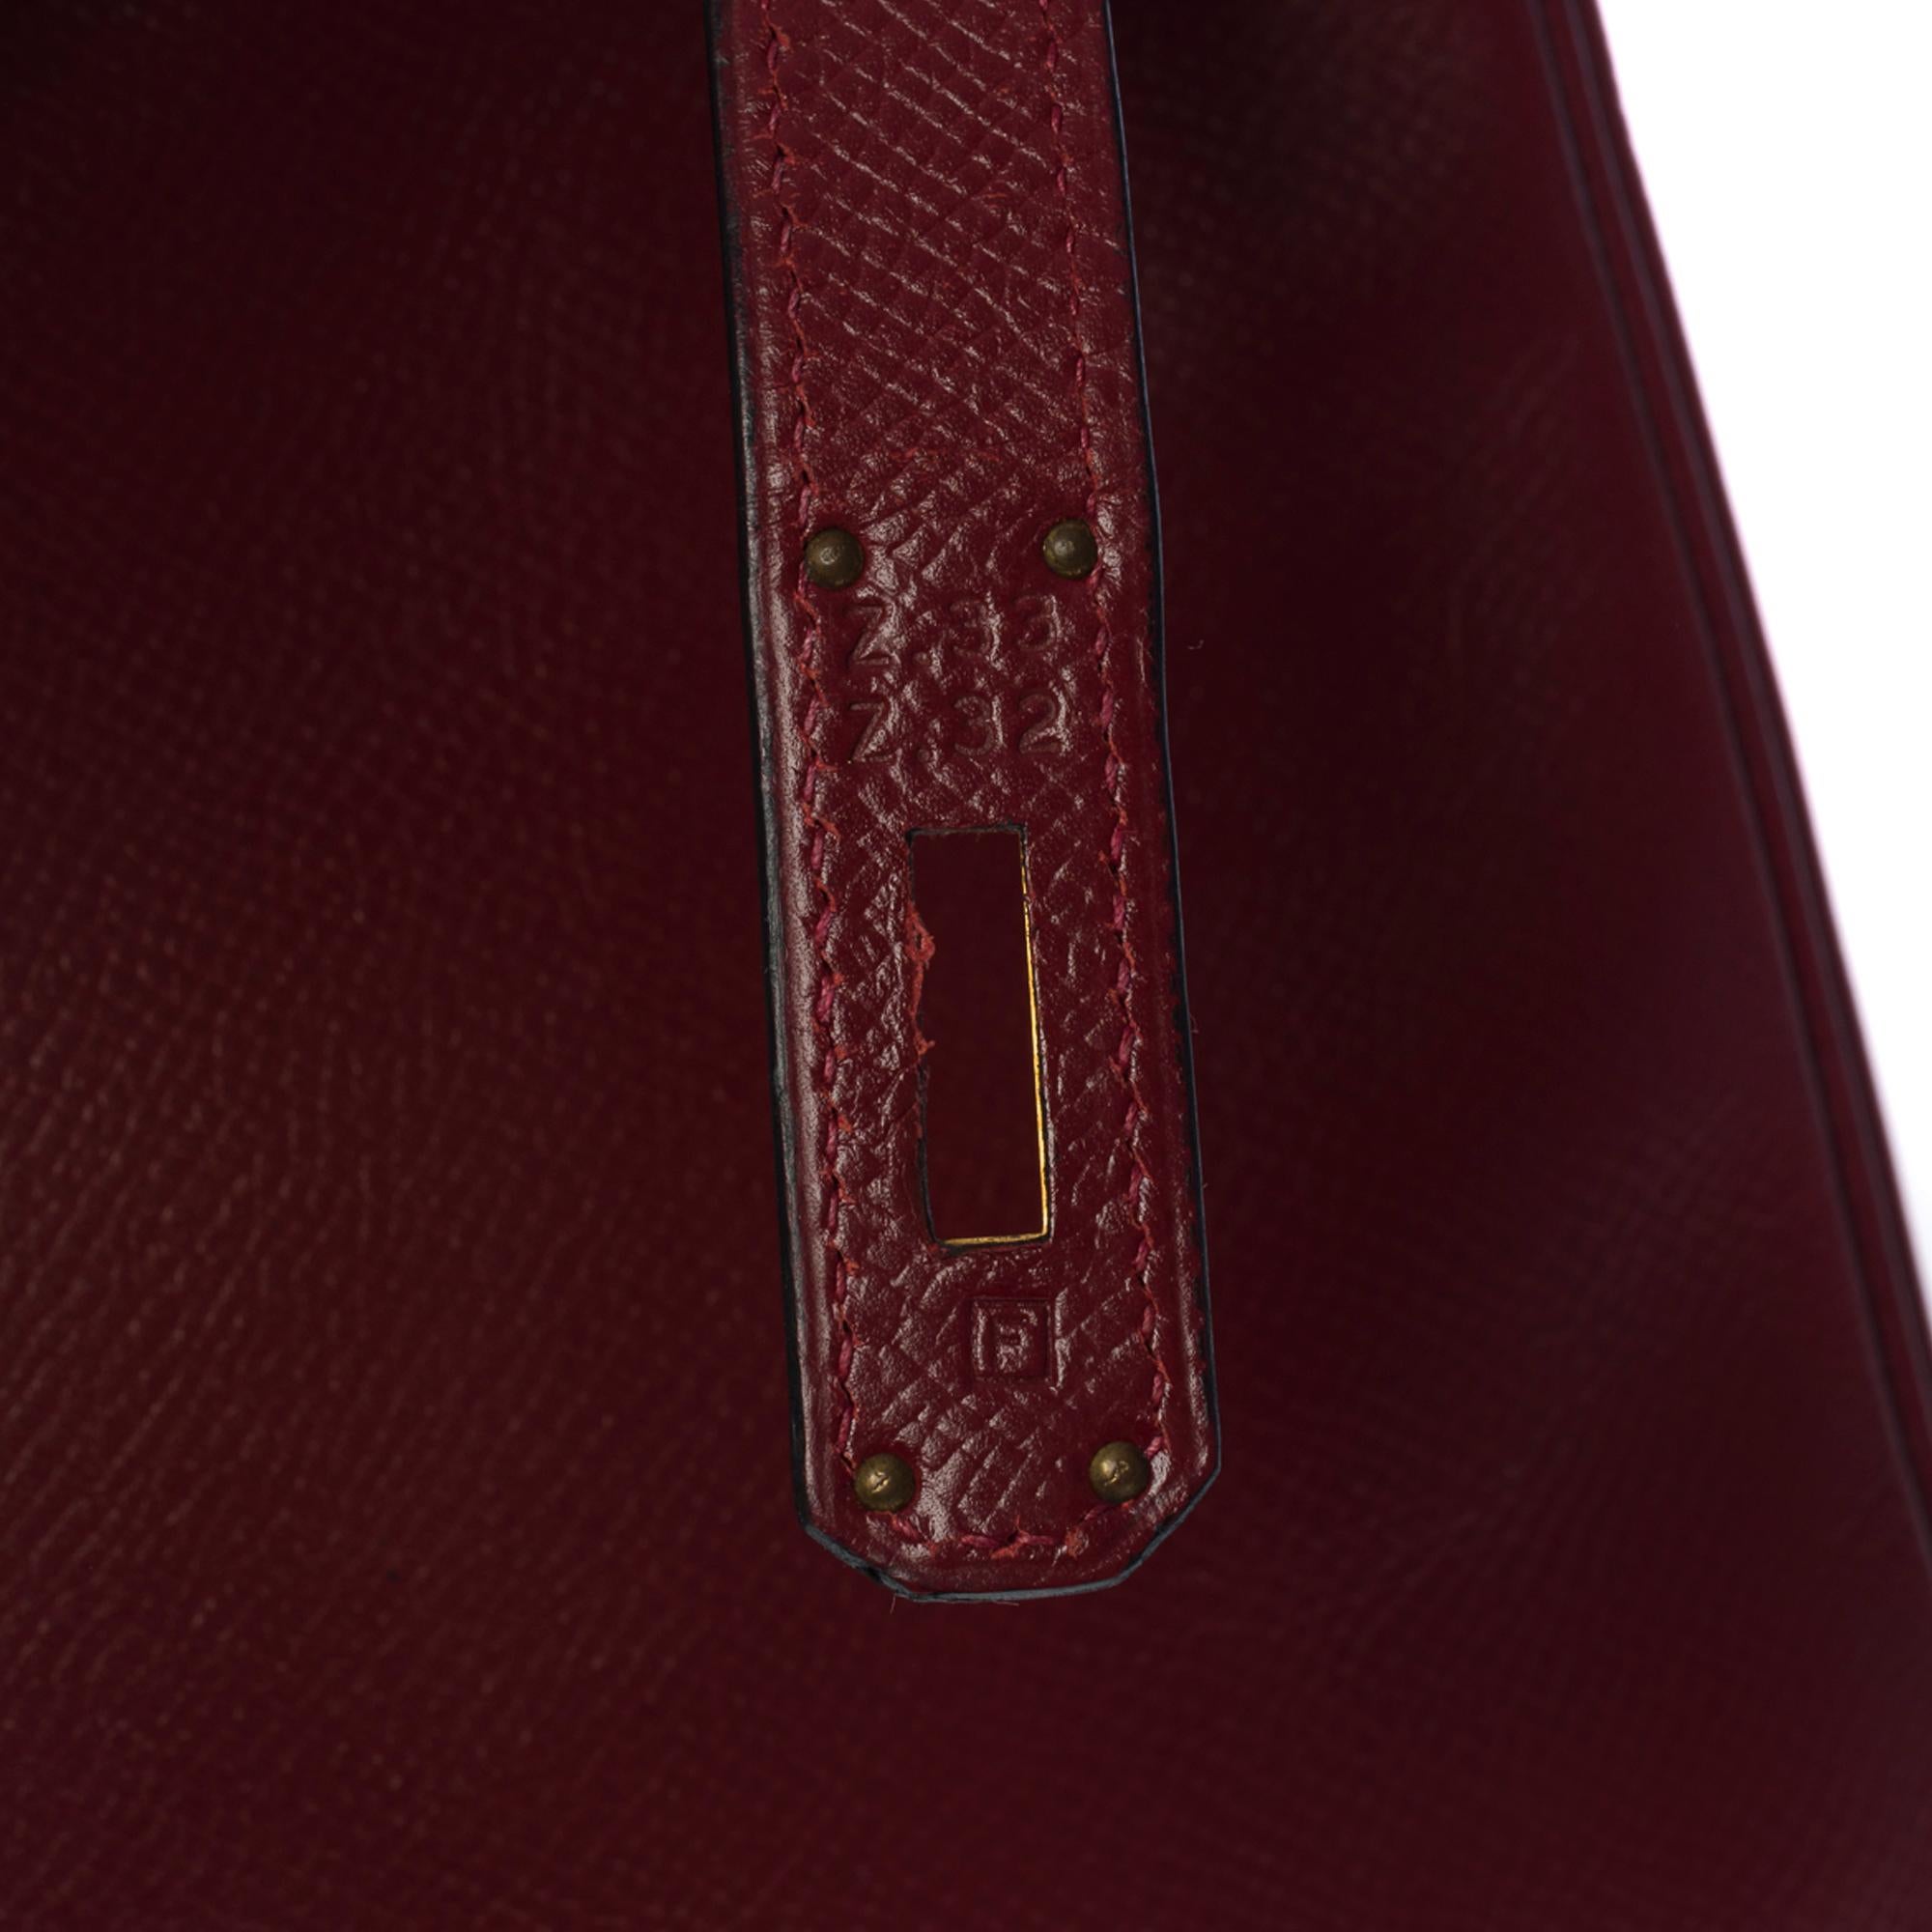 Stunning Hermès Birkin 35 handbag in Rouge H (Burgundy) epsom leather, GHW 2